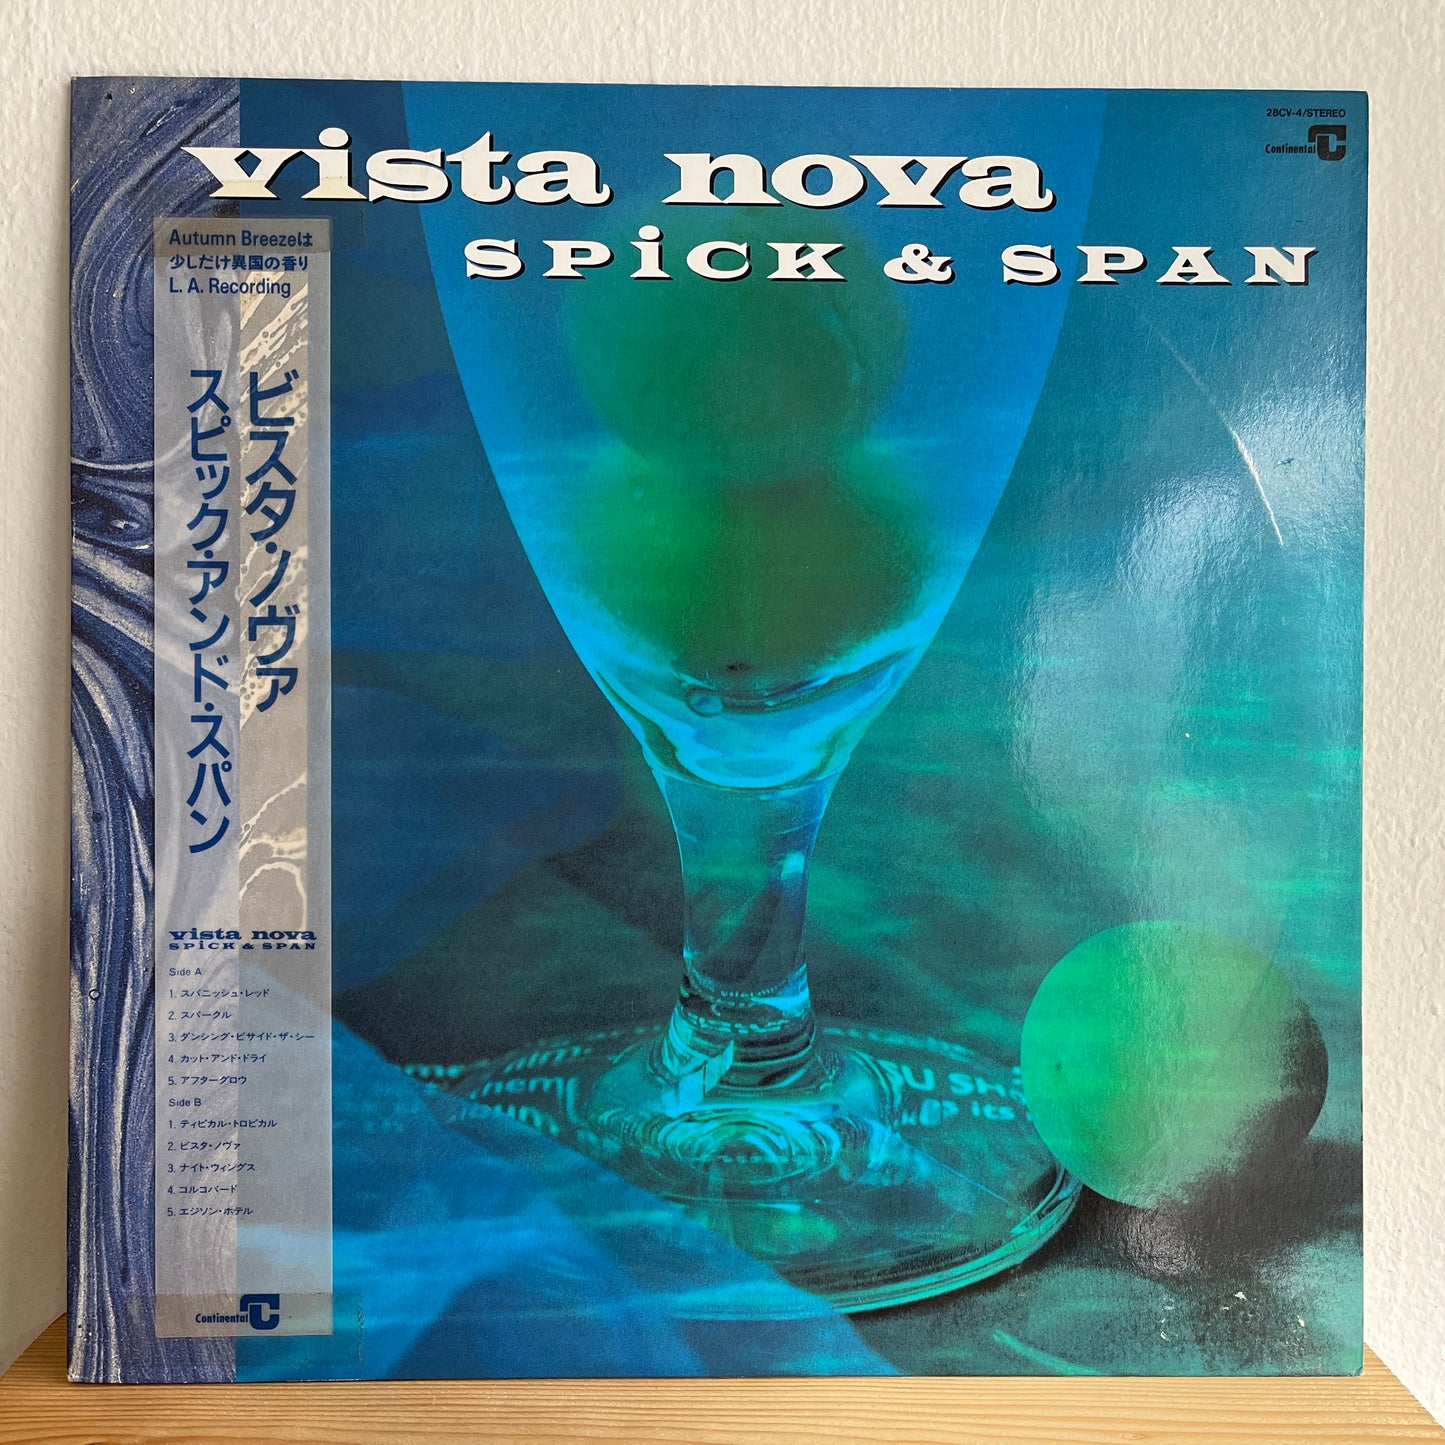 Spick &amp; Span – Vista Nova